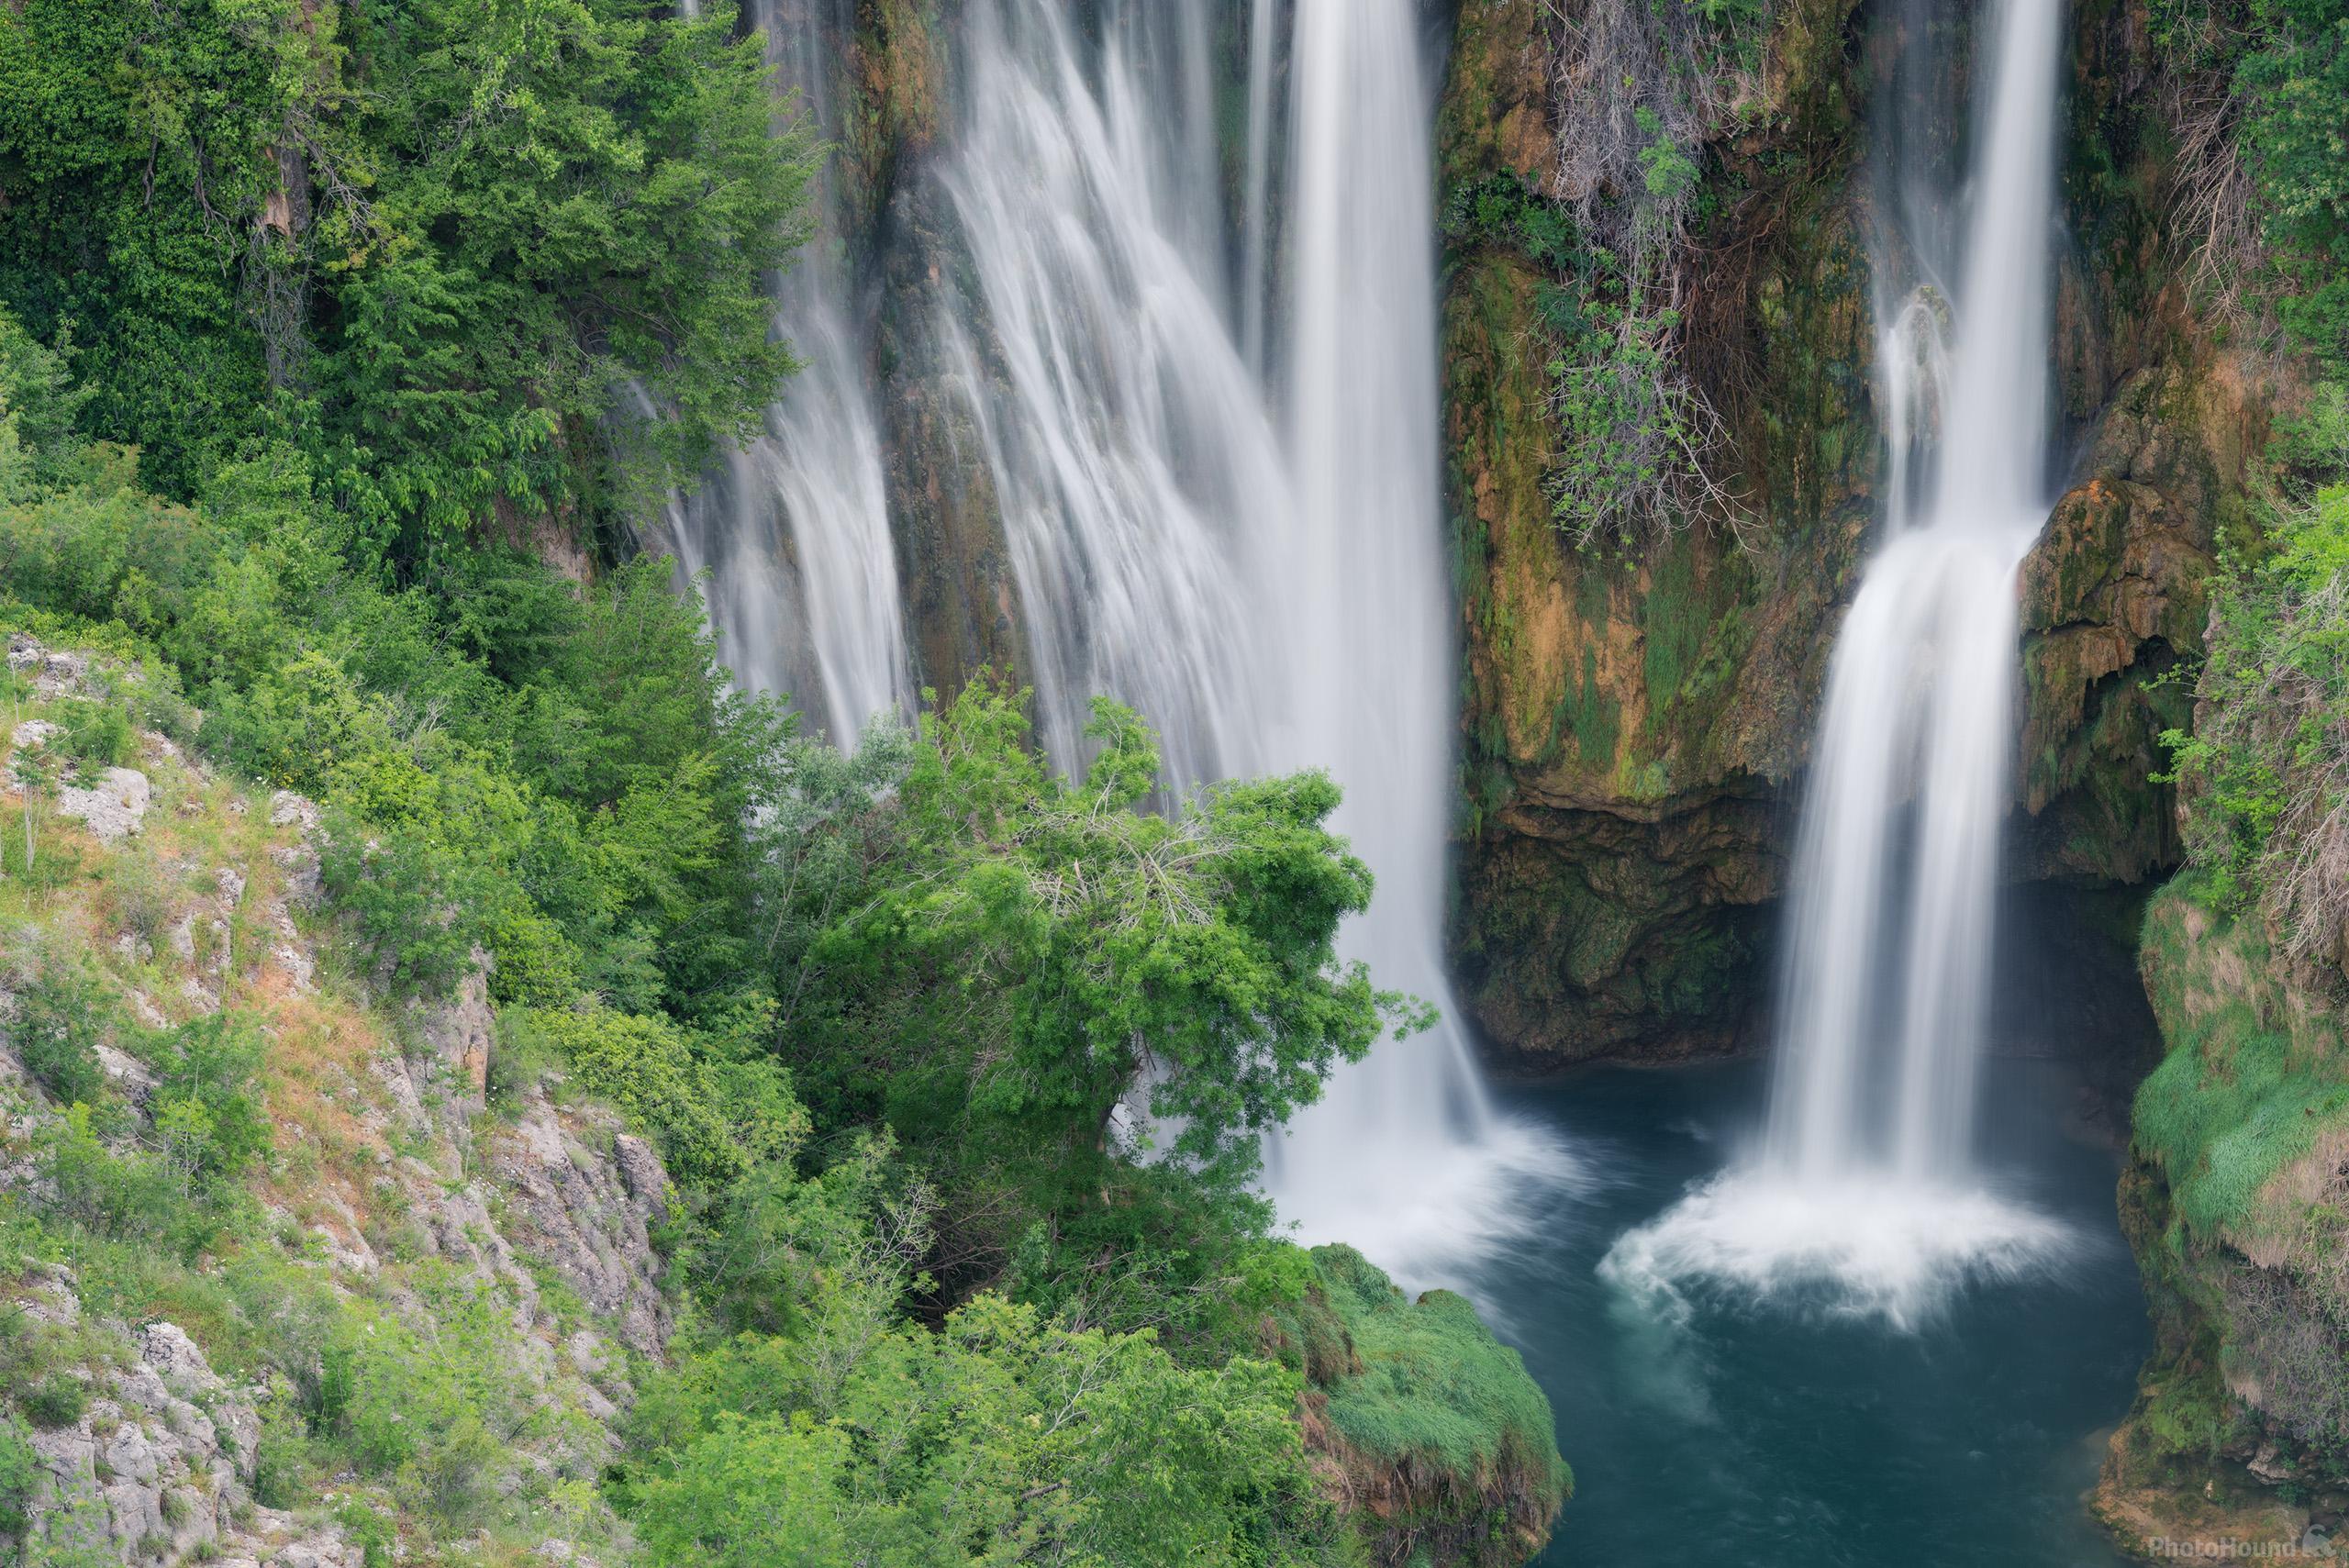 Image of Manojlovački Slapovi (Manojlovac Falls) by Luka Esenko